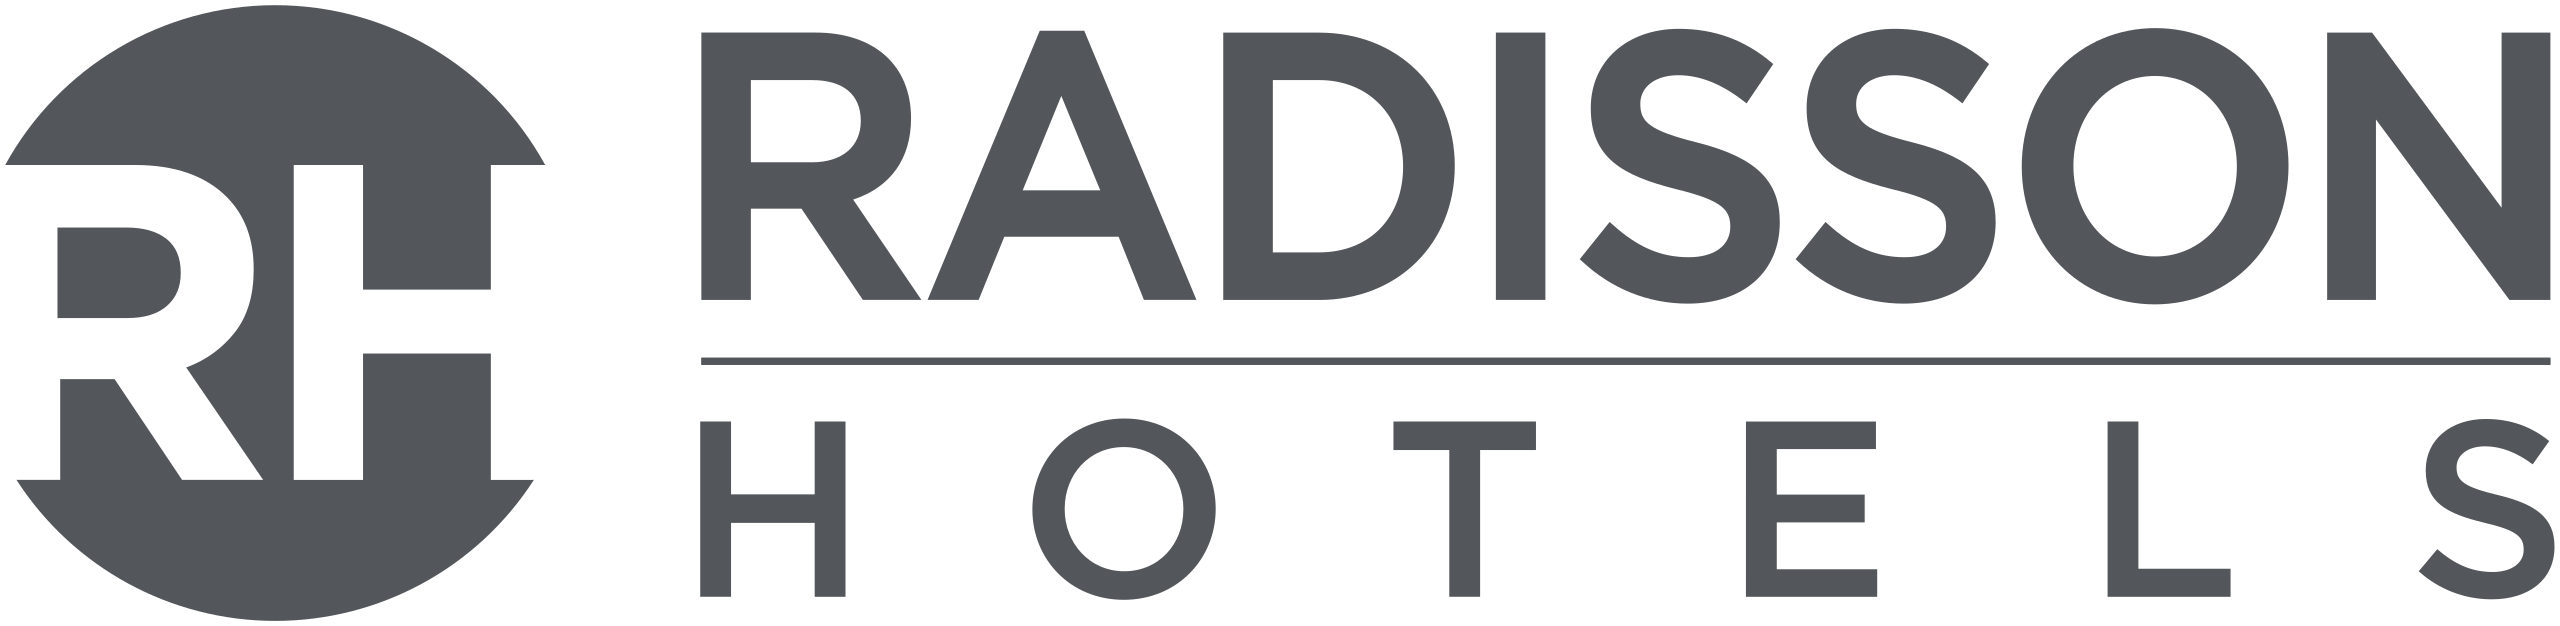 File:Radisson Hotels logo.svg - Wikipedia